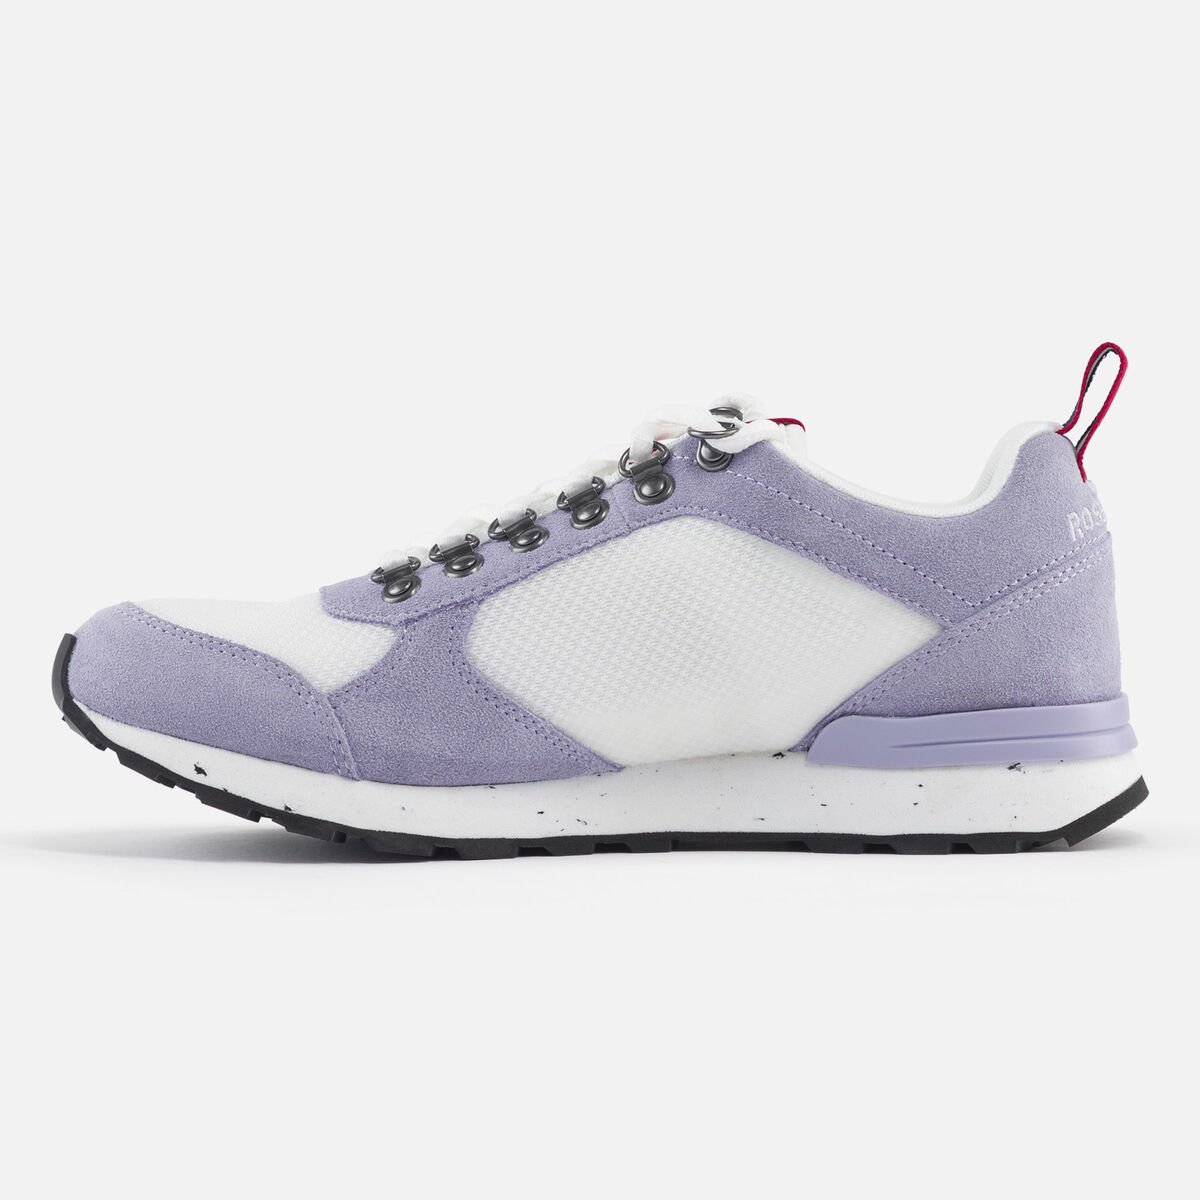 Women's Heritage Special lavender sneakers